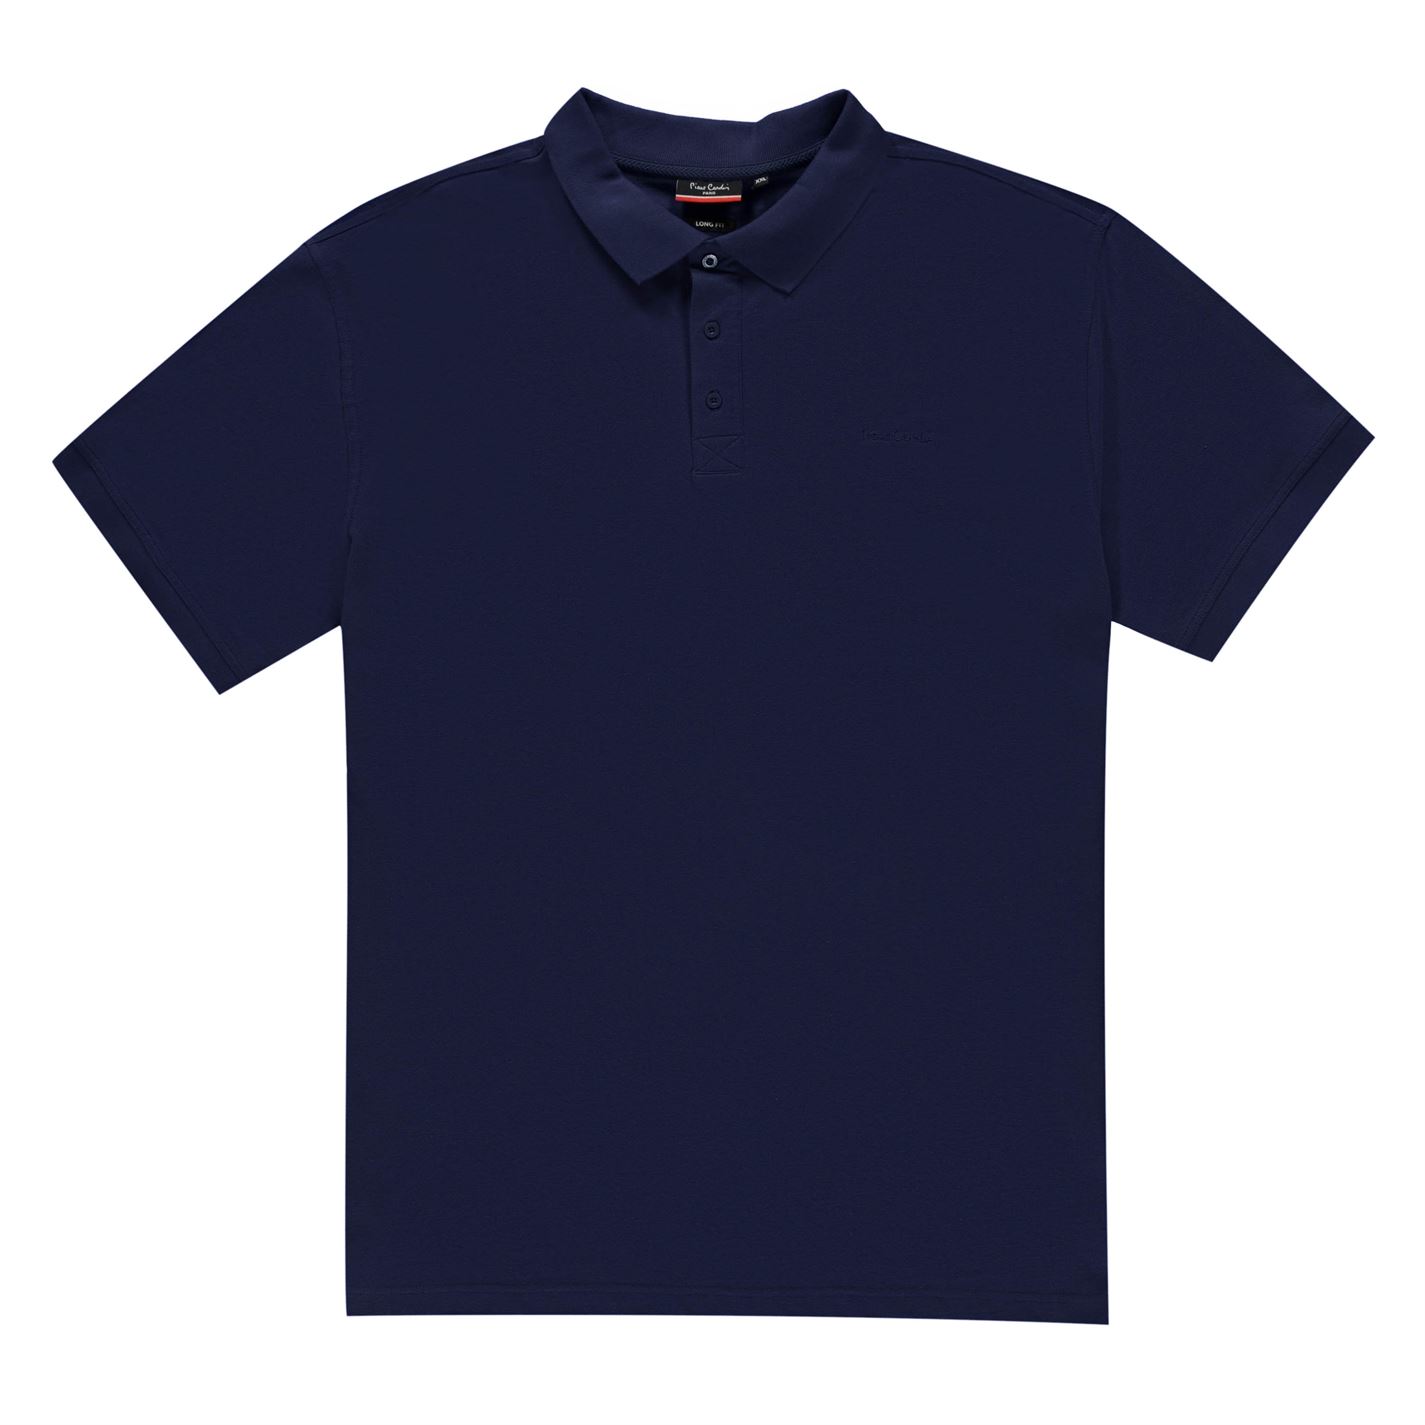 XL Plain Polohemd Herren Shorts sleeves3 button placket fastening